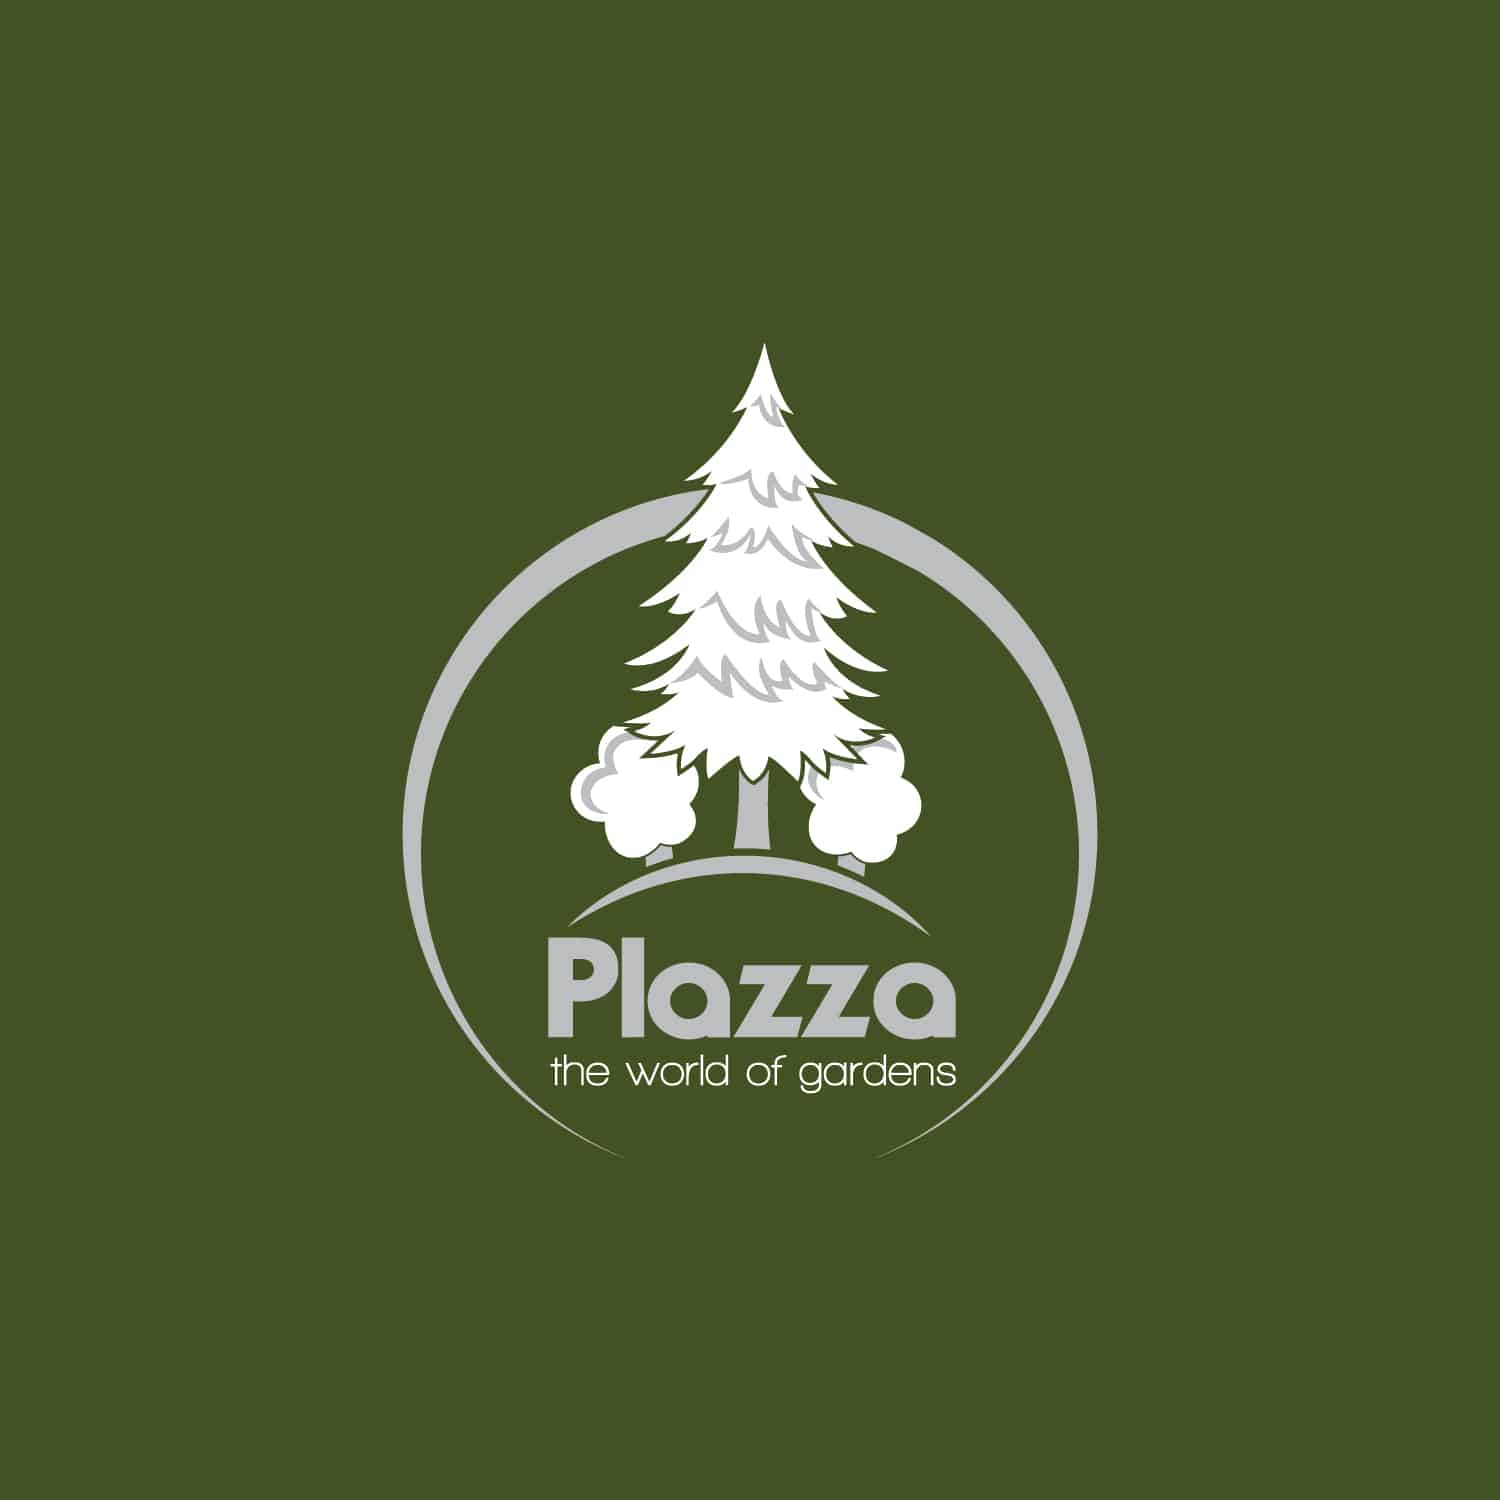 https://horizonplus.eu/project/branding-and-identity-plazza/